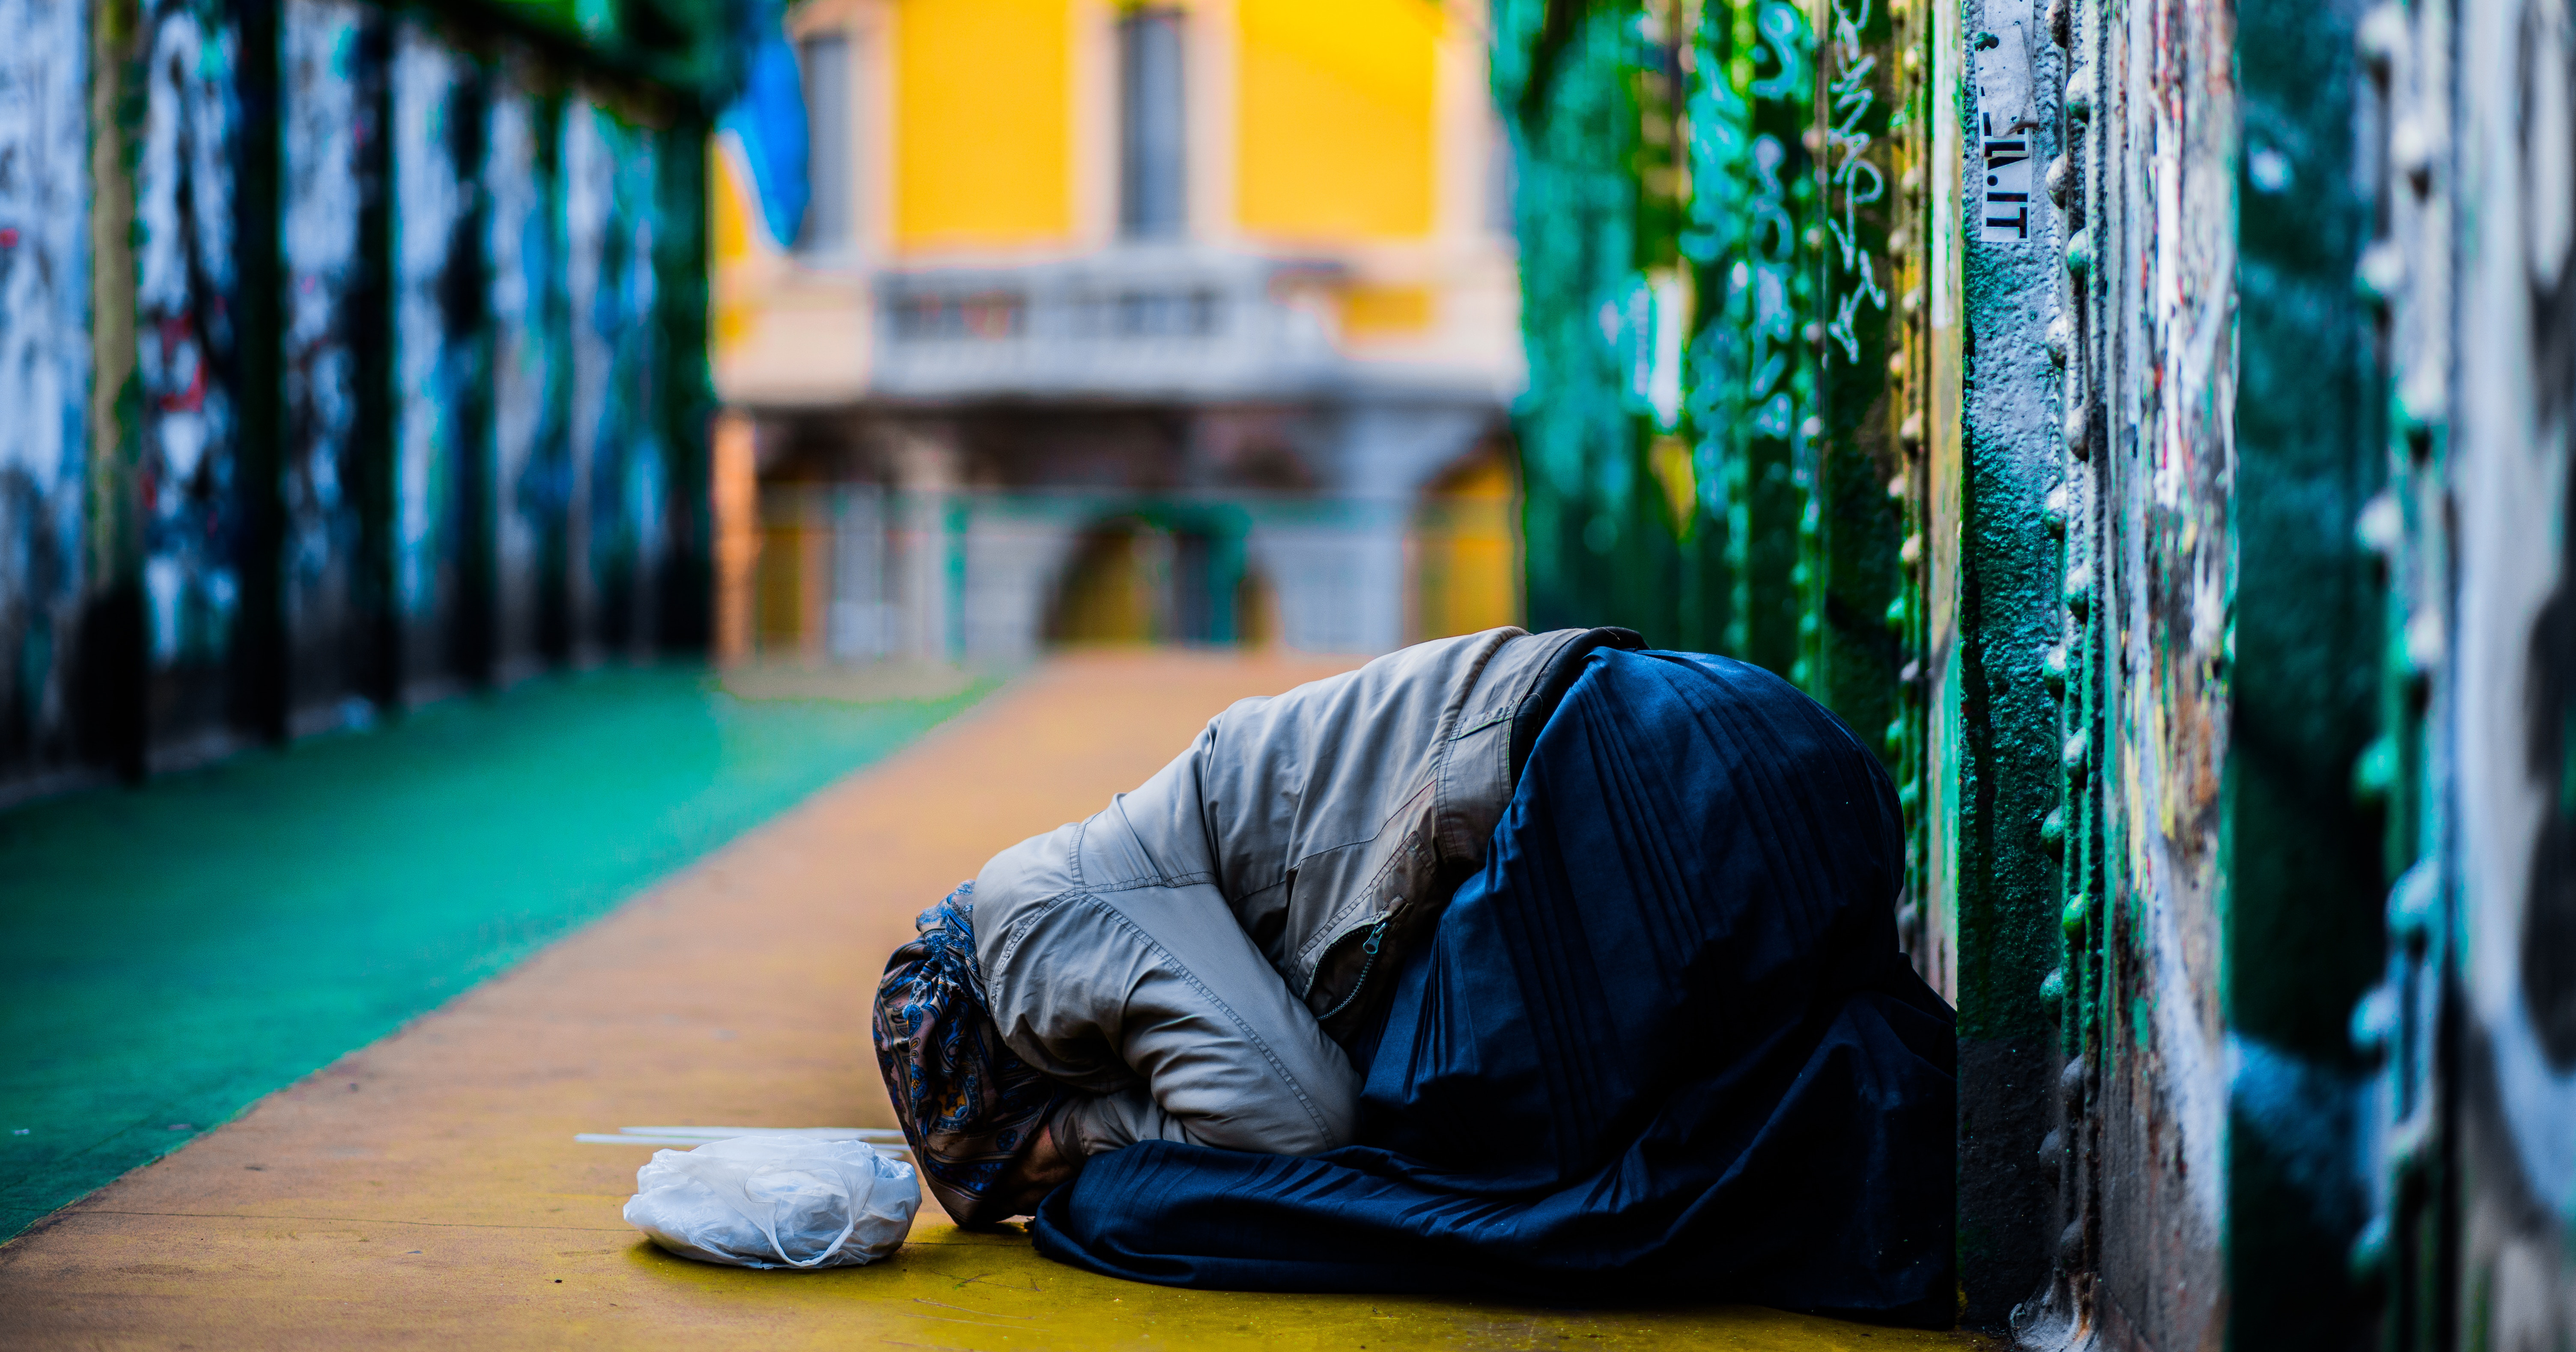 On a bridge, a kneeling homeless women leans over, hiding her face